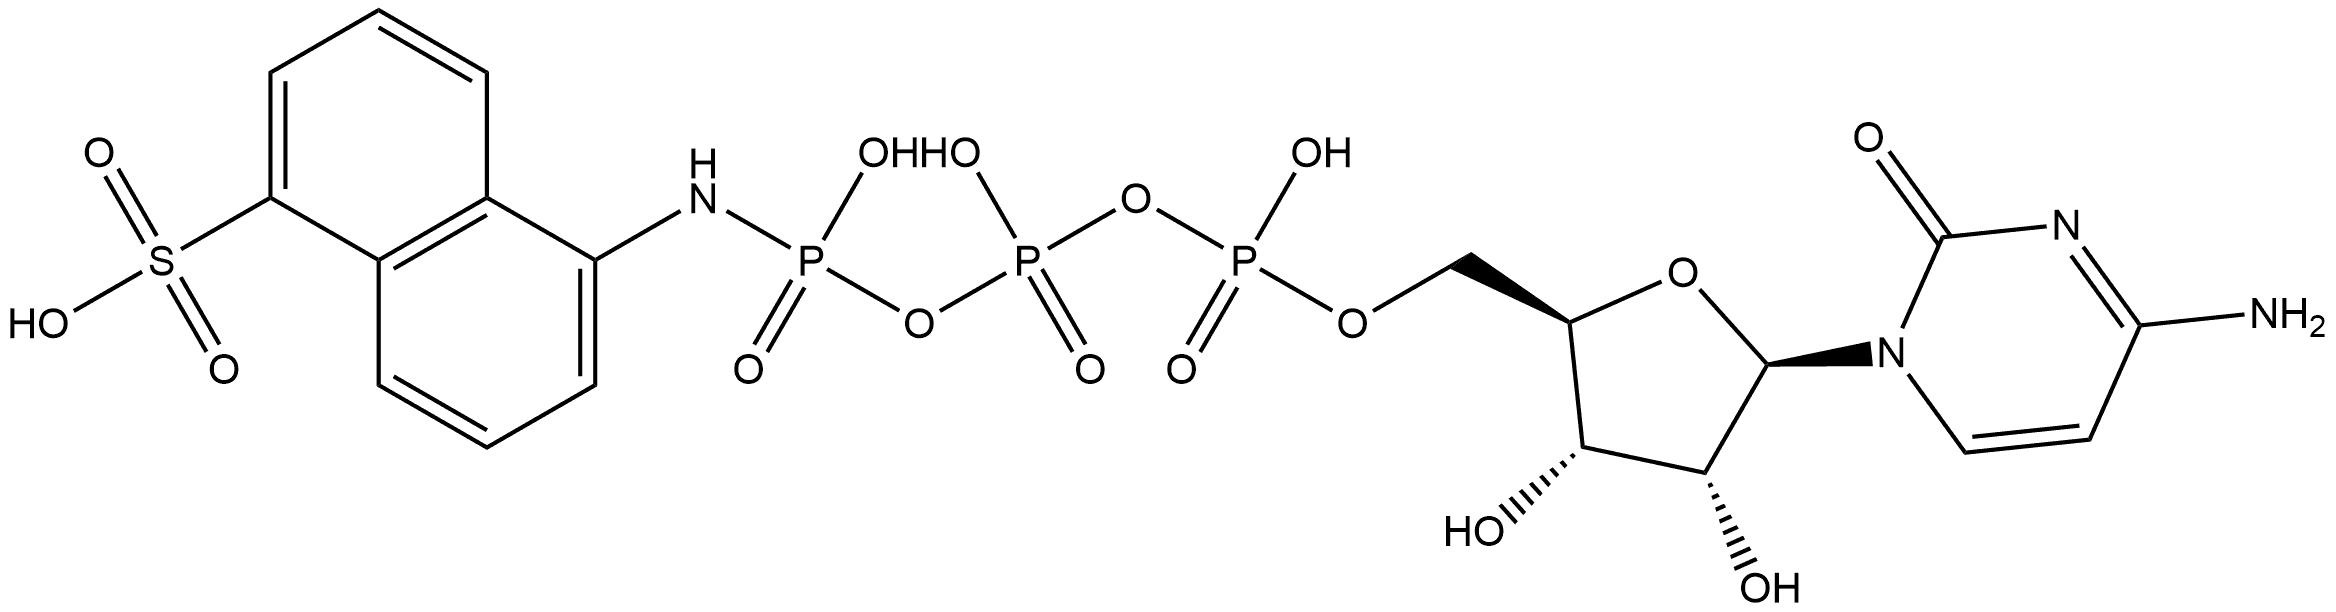 CTP-γ-AmNS Structure